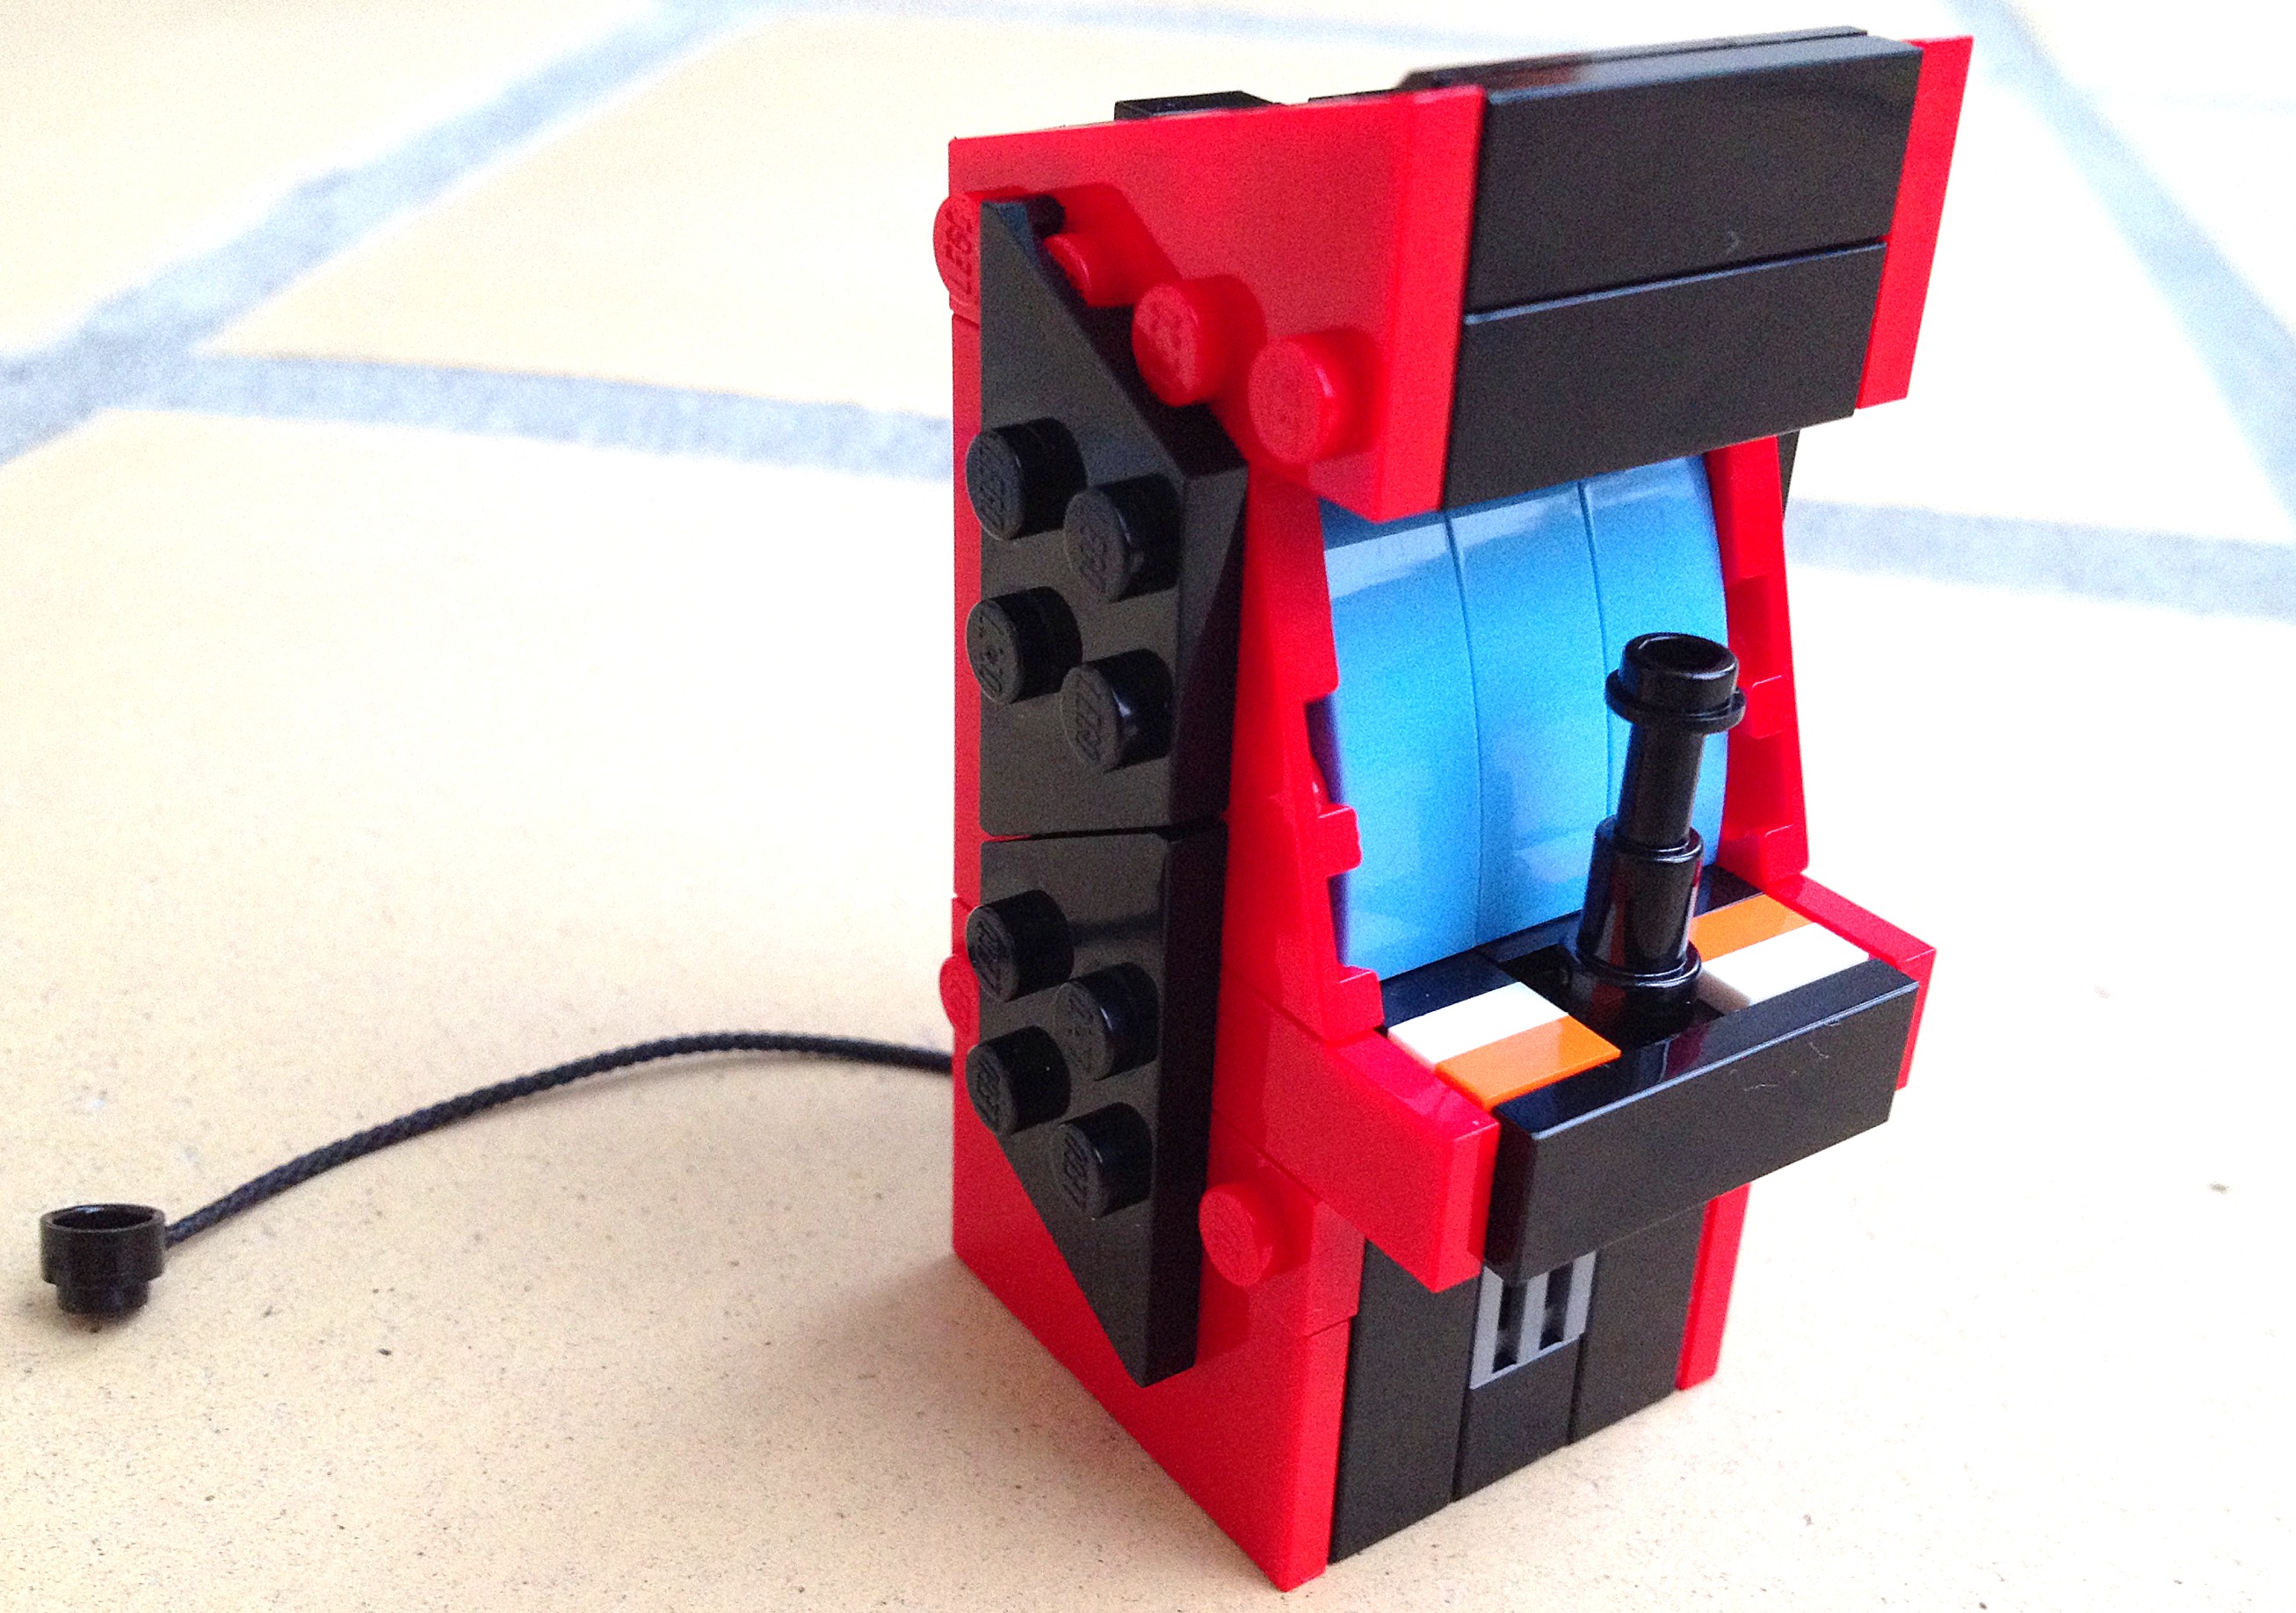 LEGO arcade machine made from LEGO bricks. Awesome office gadget